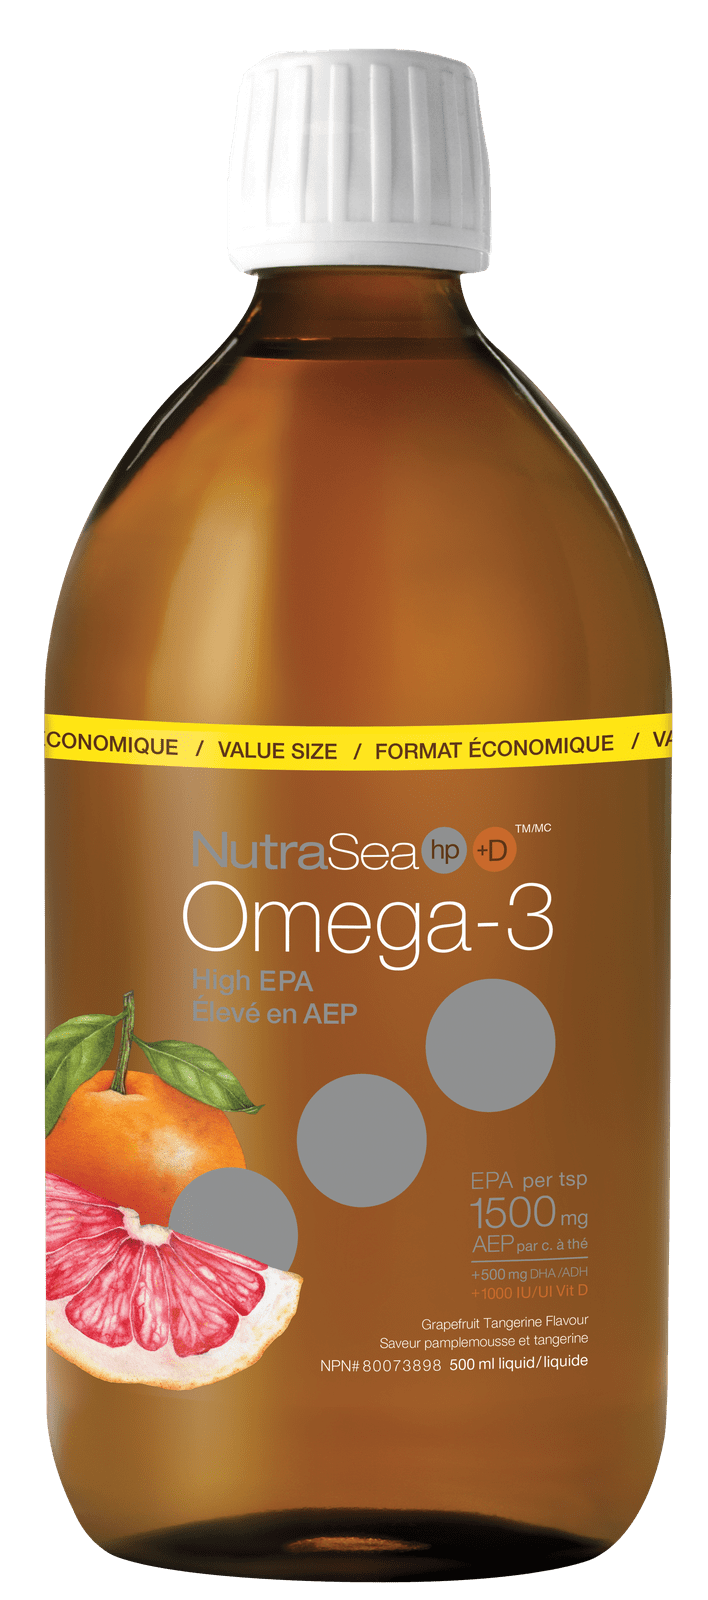 NutraSea HP +D Omega-3 High EPA 1500 mg - Grapefruit Tangerine Image 1